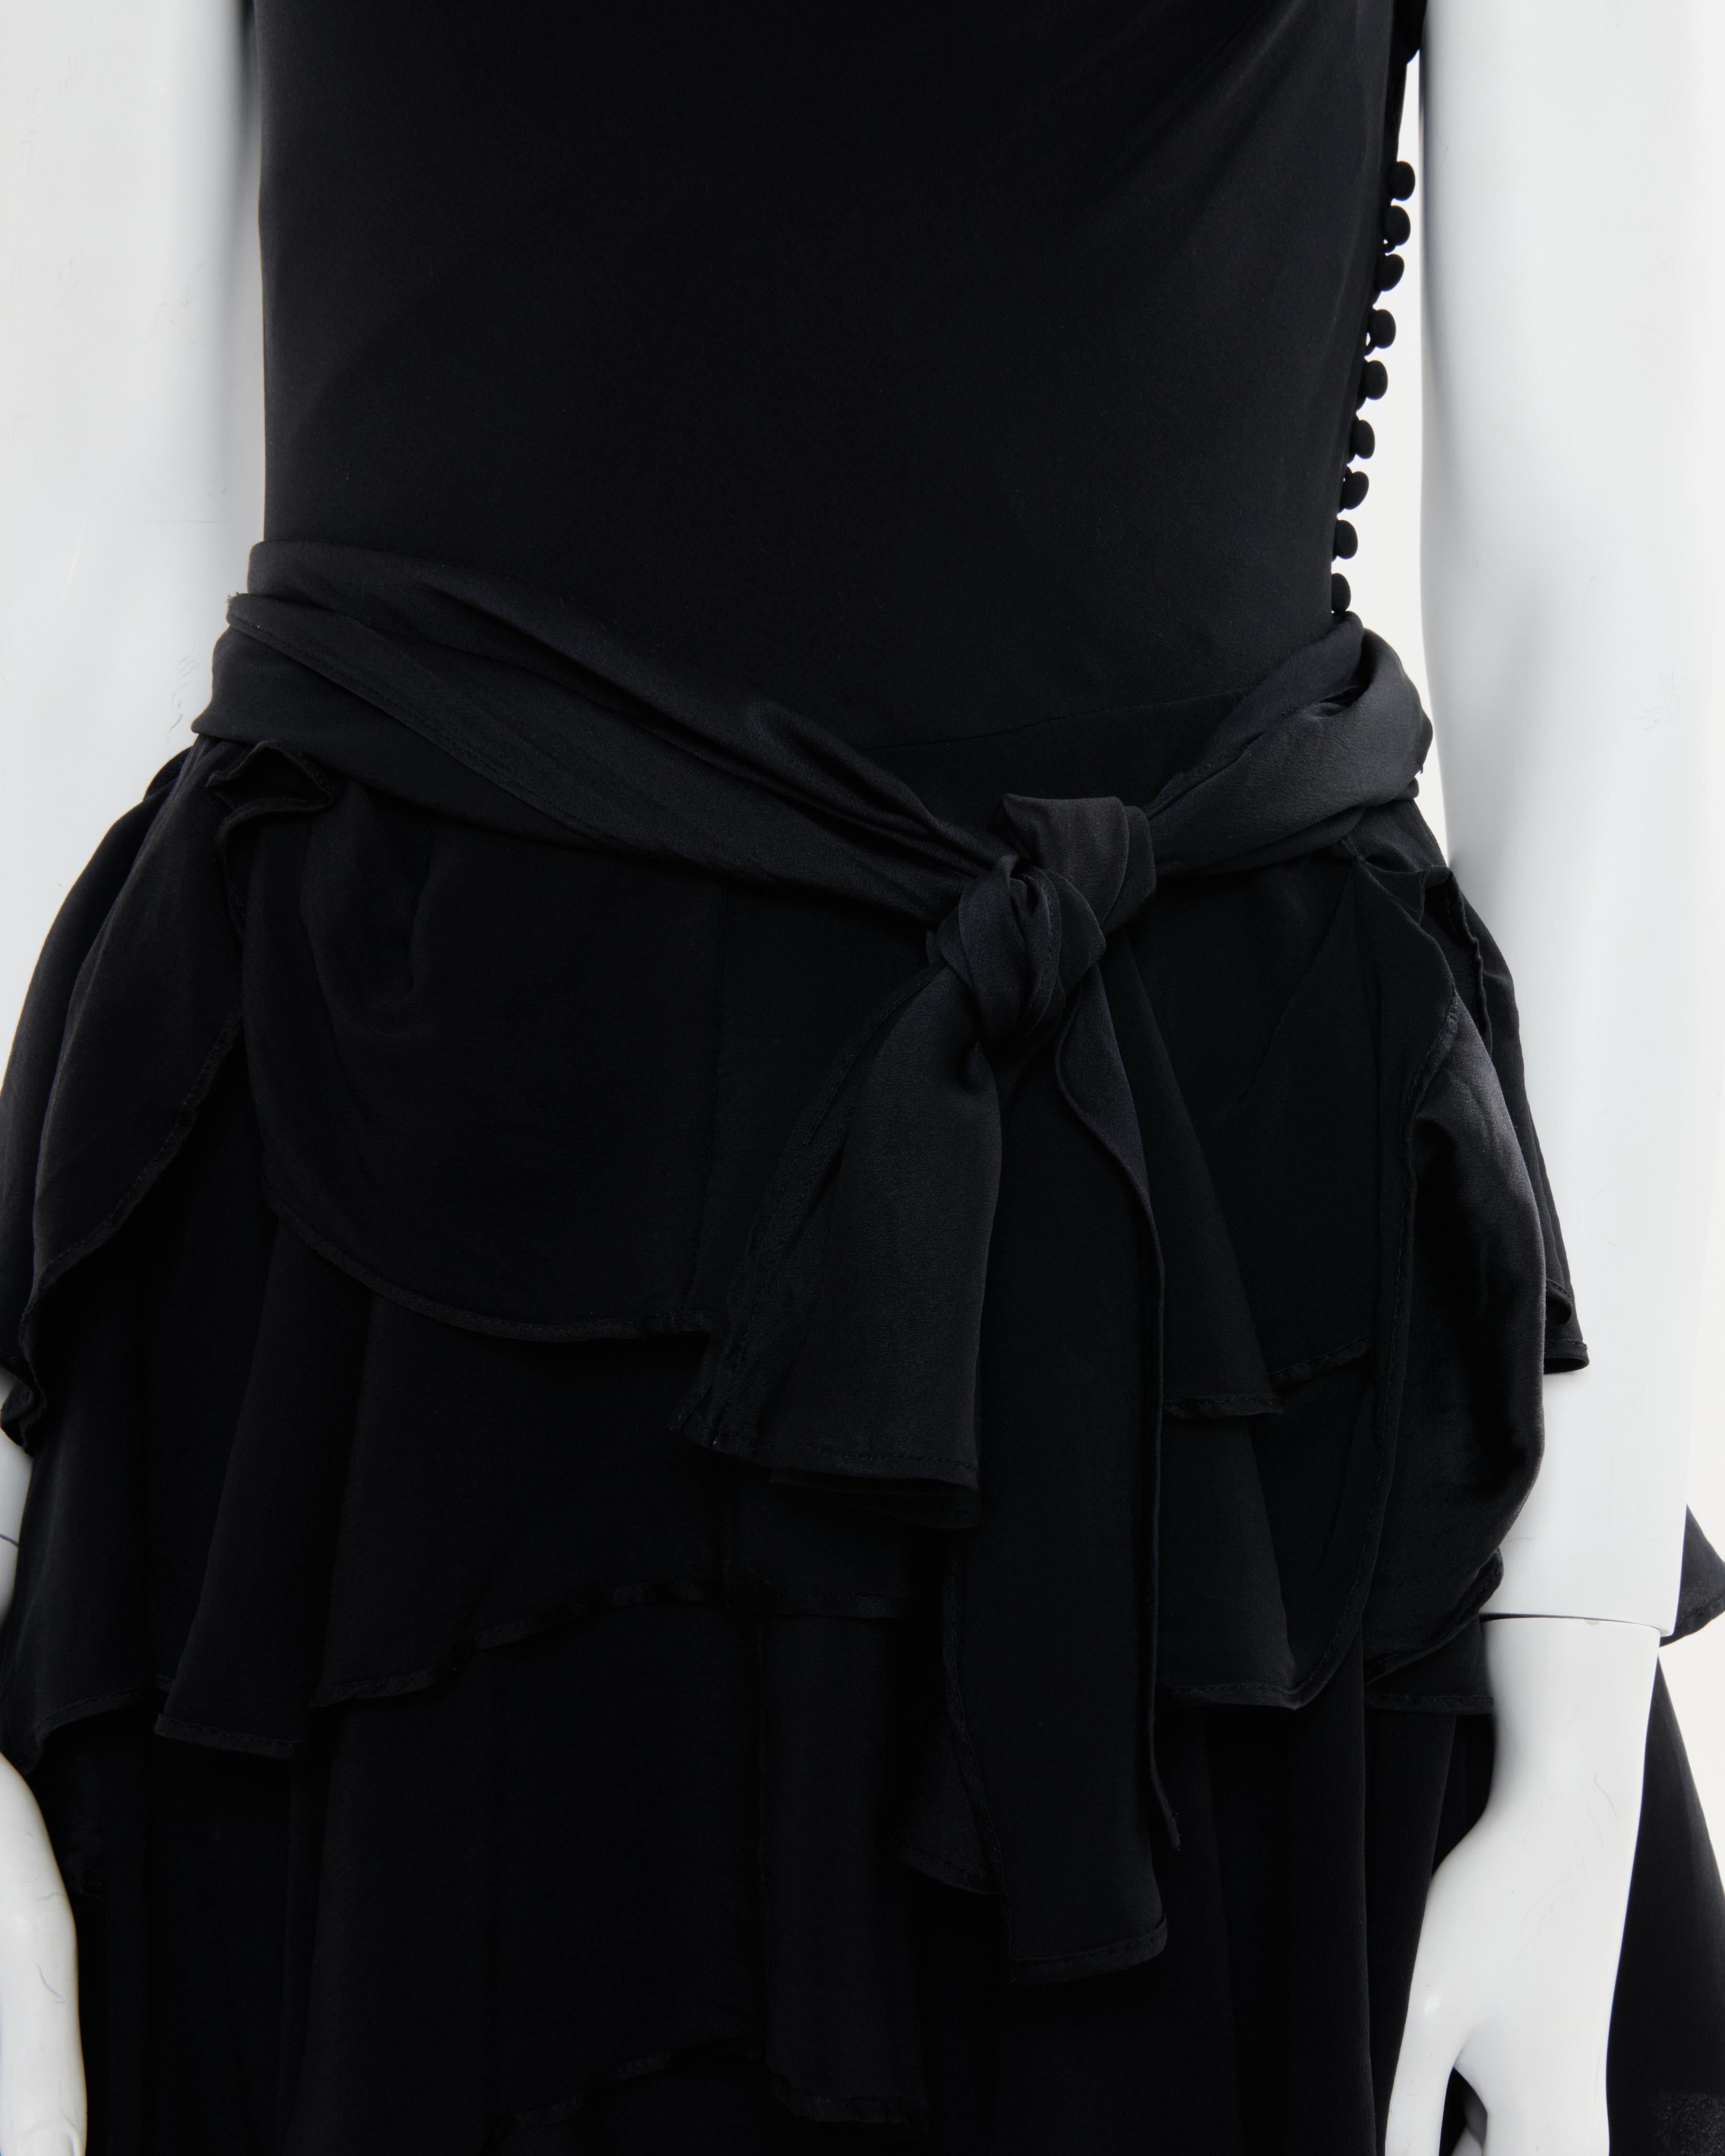 Christian Dior by John Galliano F/W 2006 Black silk bias-cut evening dress 4